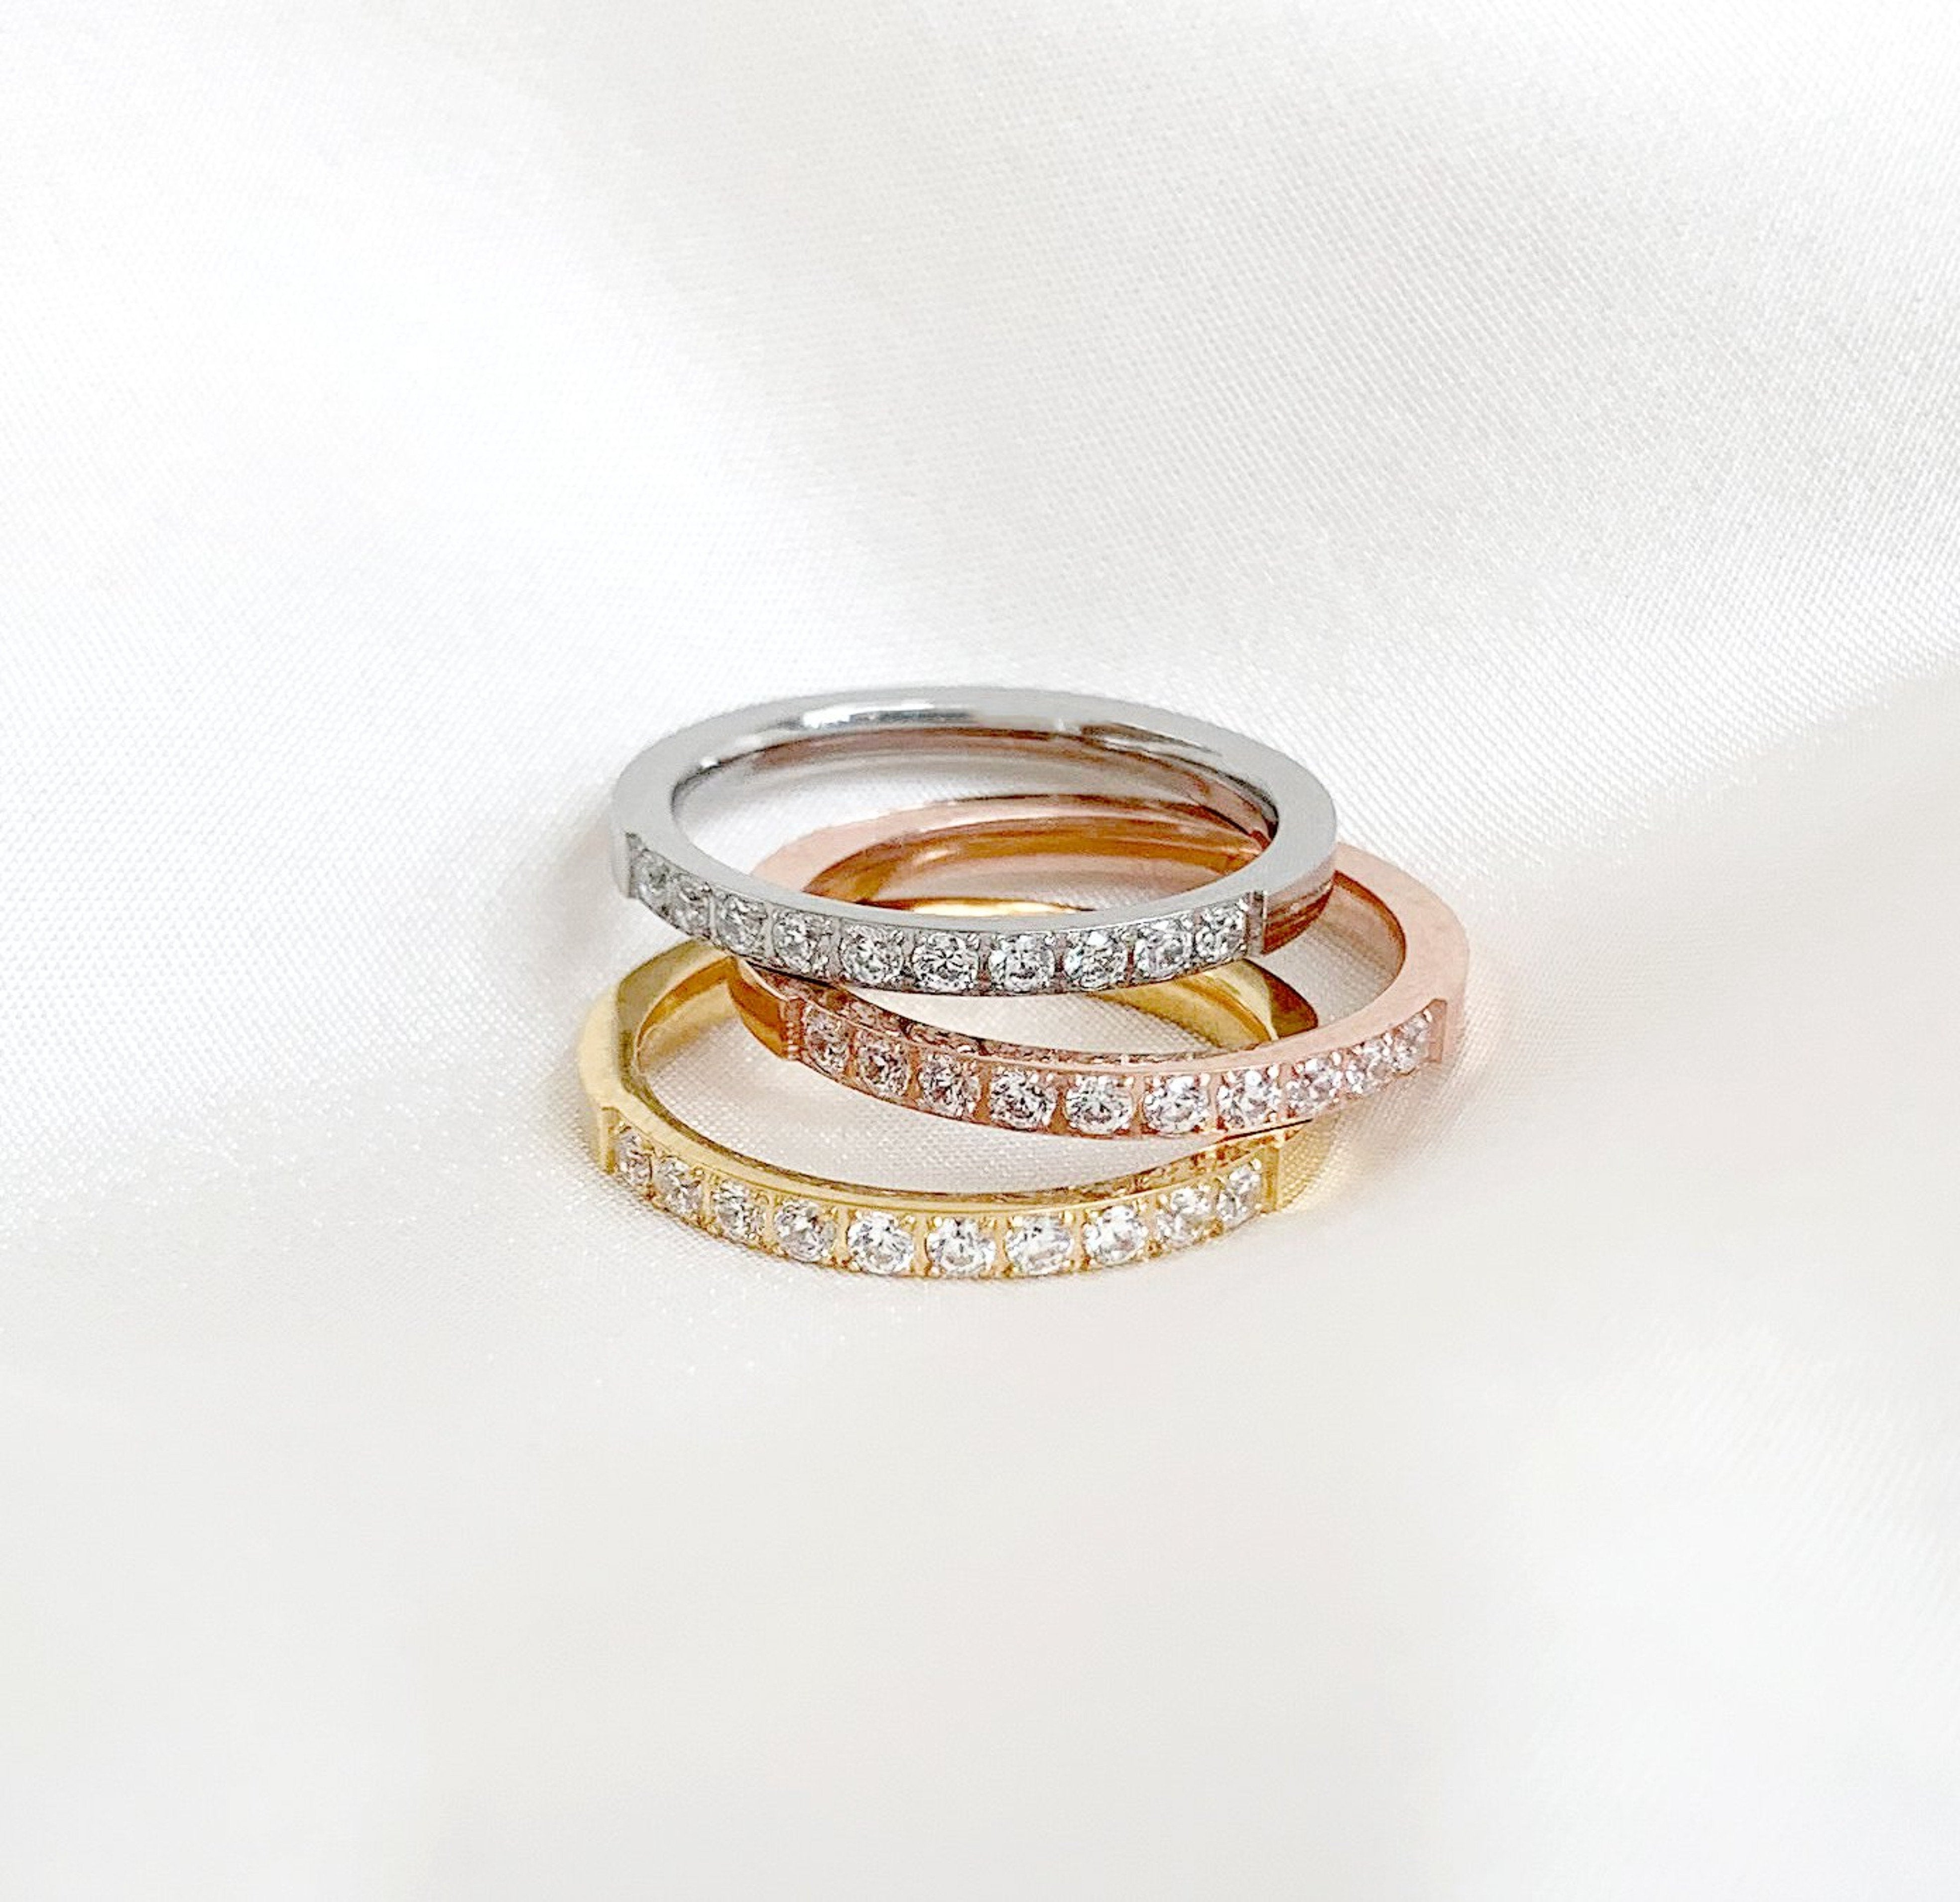 Stella silver half eternity ring band. Silver waterproof jewelry